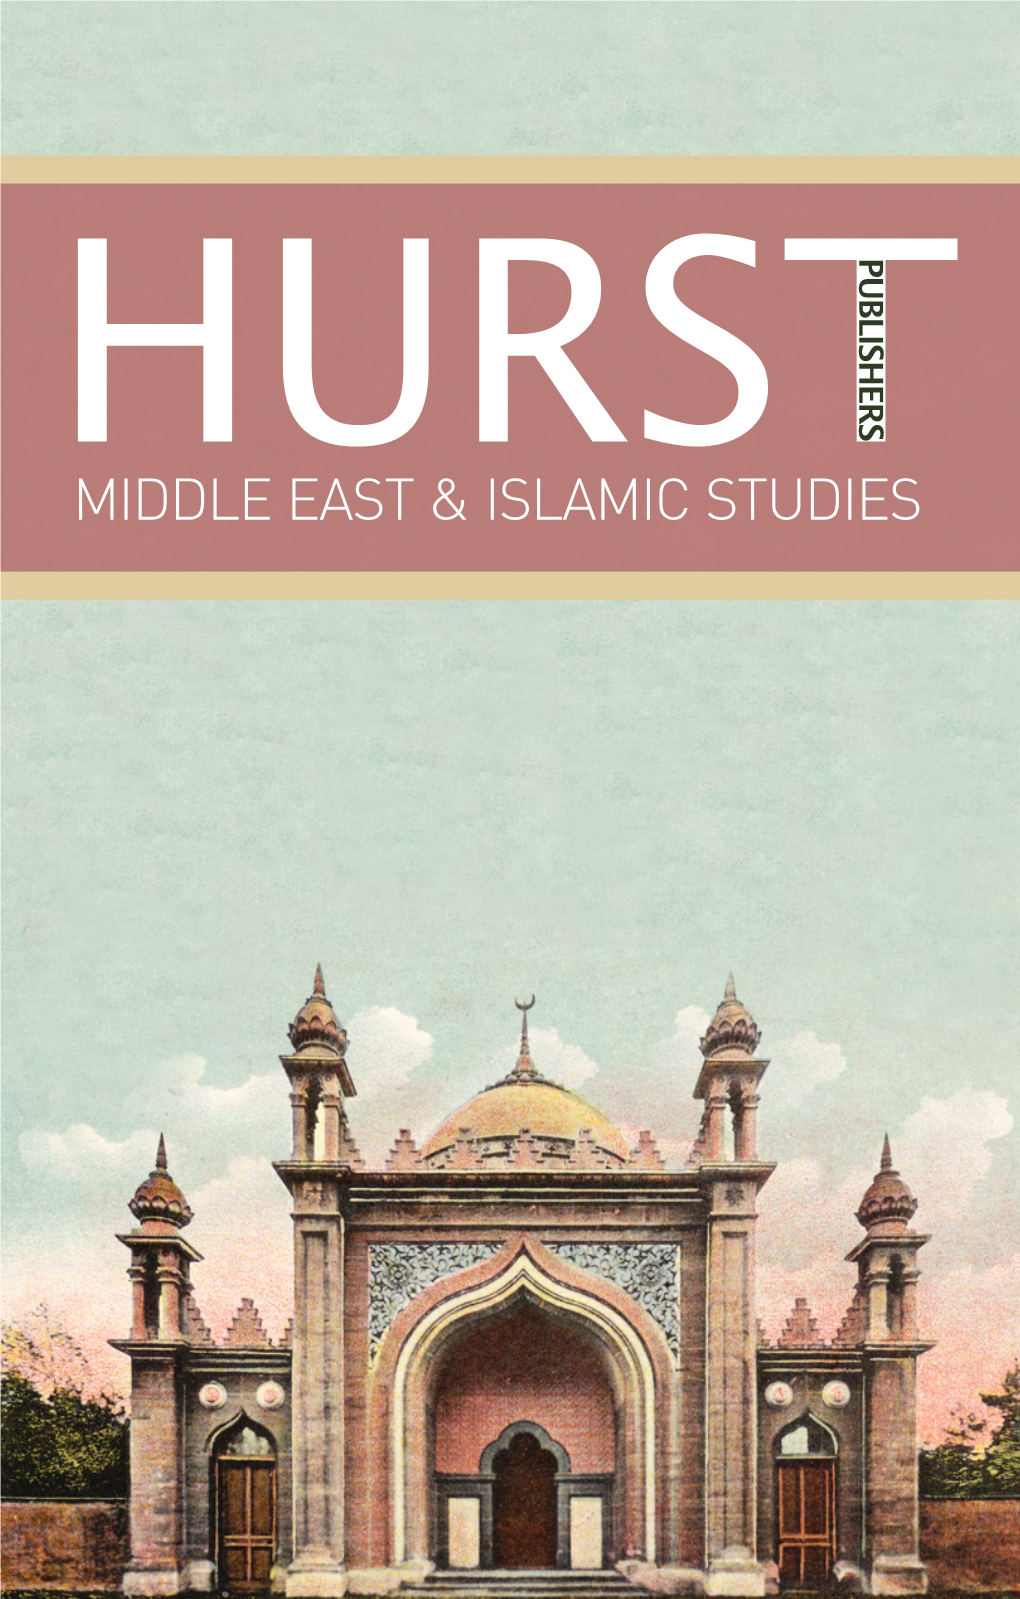 Middle East & Islamic Studies